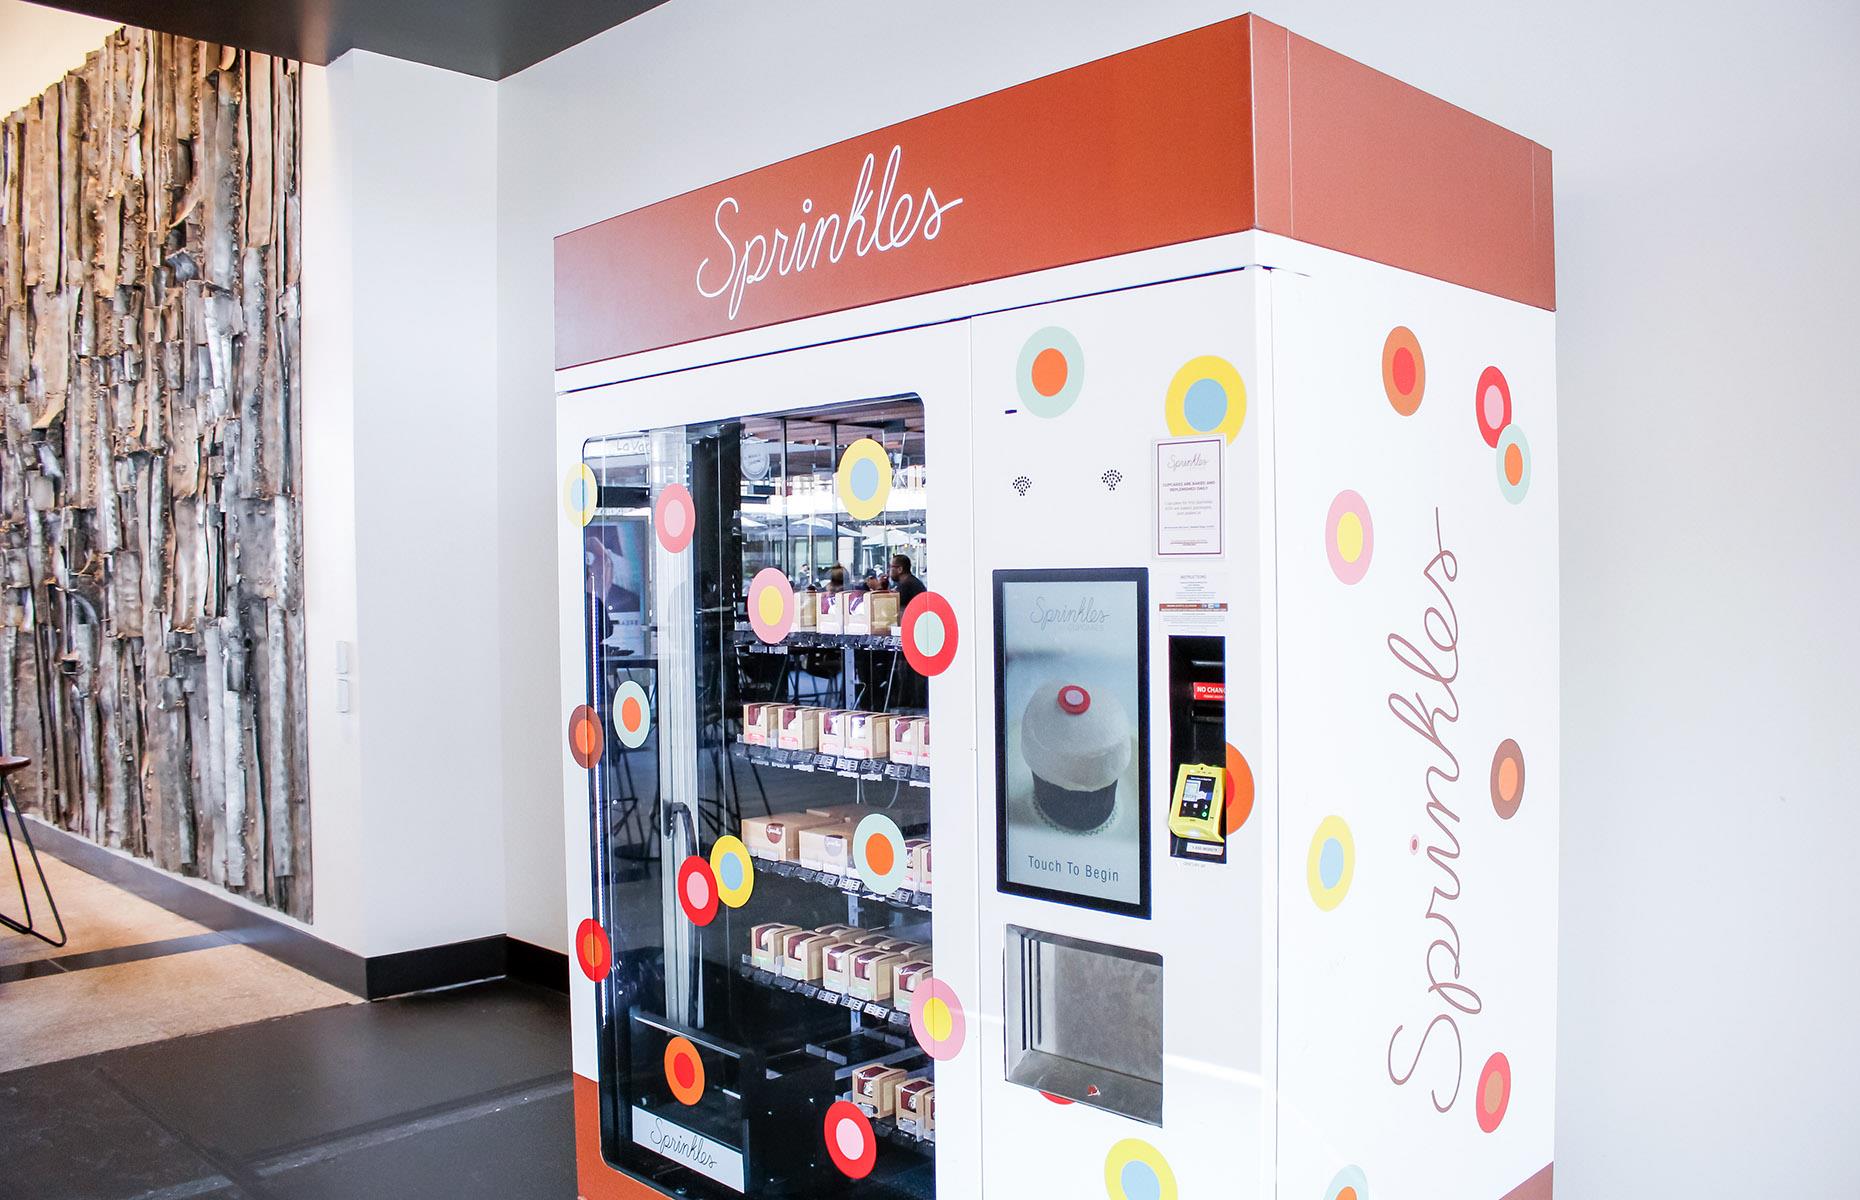 24 Vending Machines You Won't Believe Exist